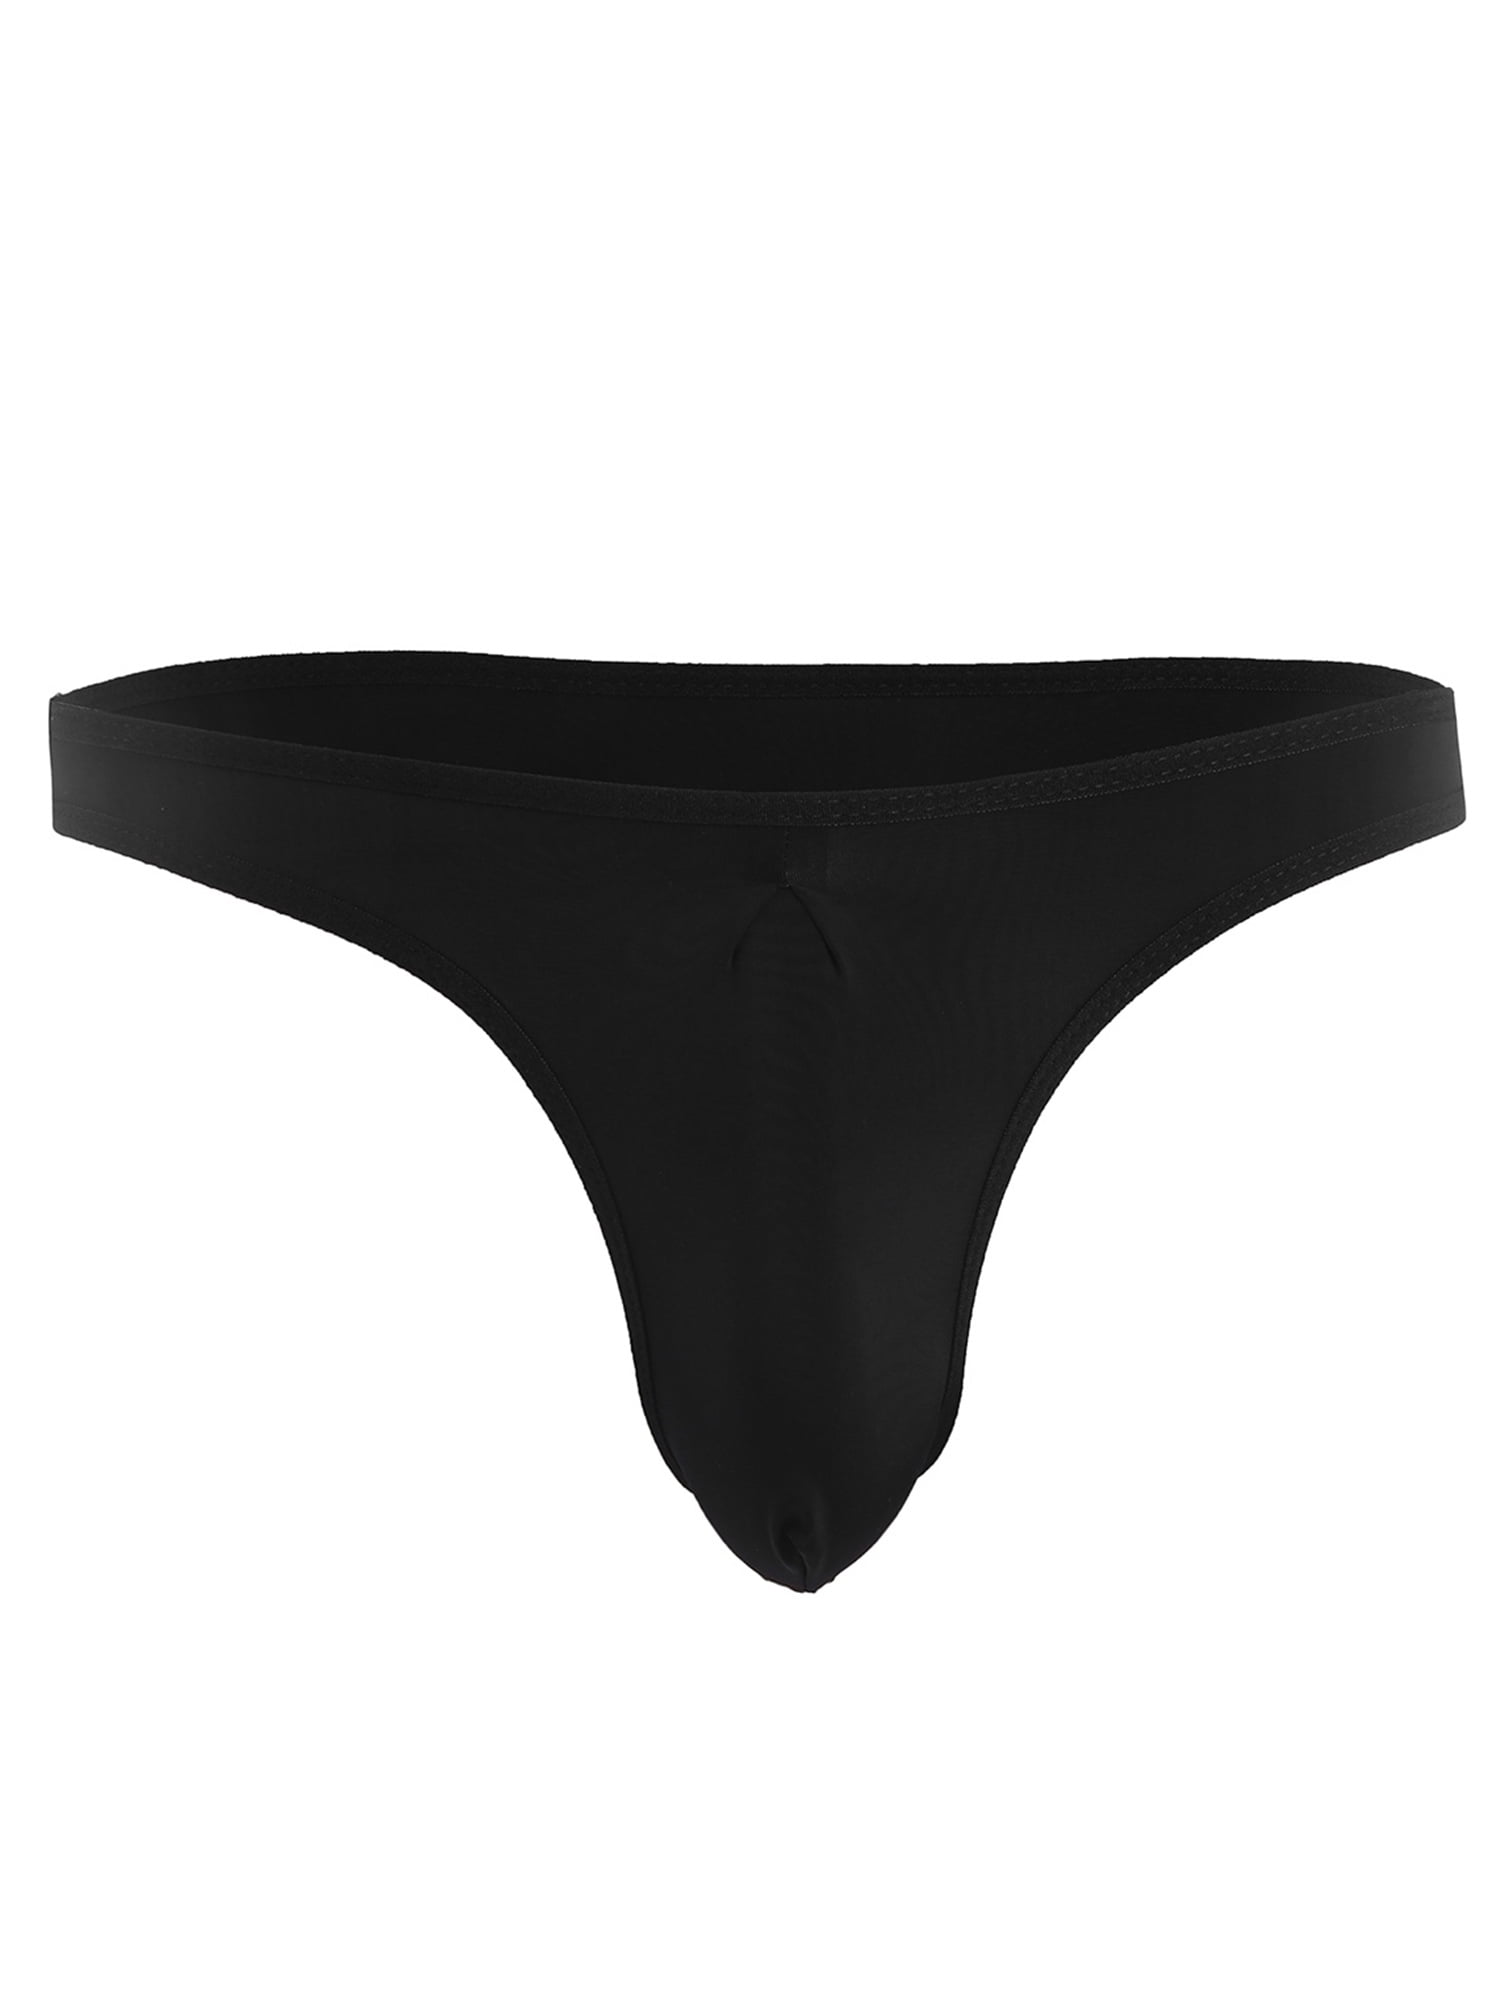 Men's Lingerie Ruched Bikini Brief Underwear Underpants Thongs Bulge Pouch Tanga